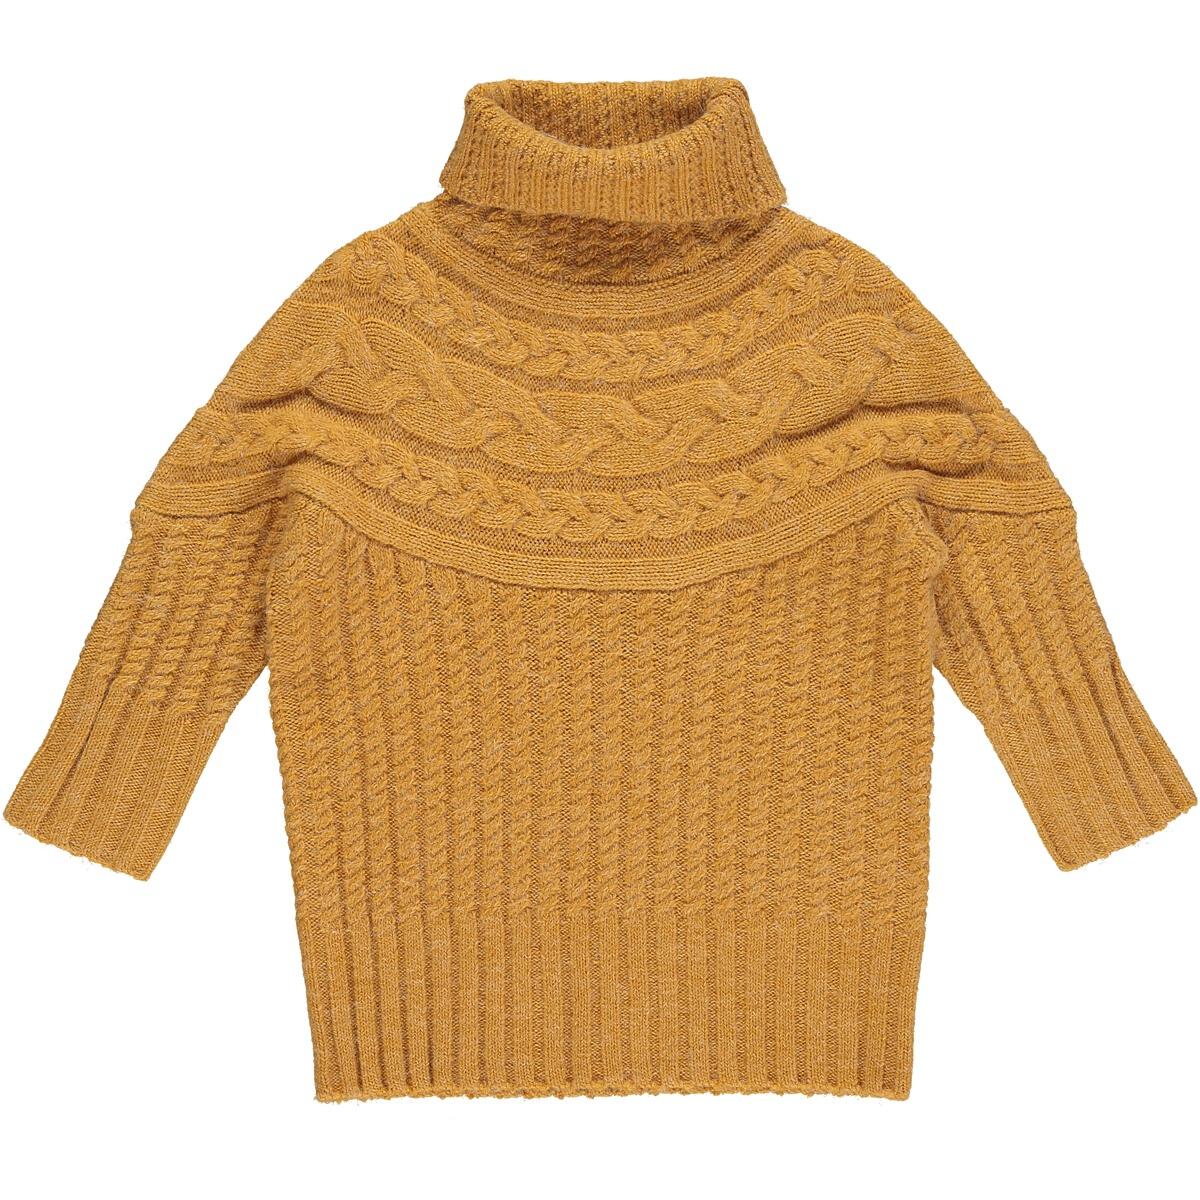 Samantha Knit Sweater - Gold